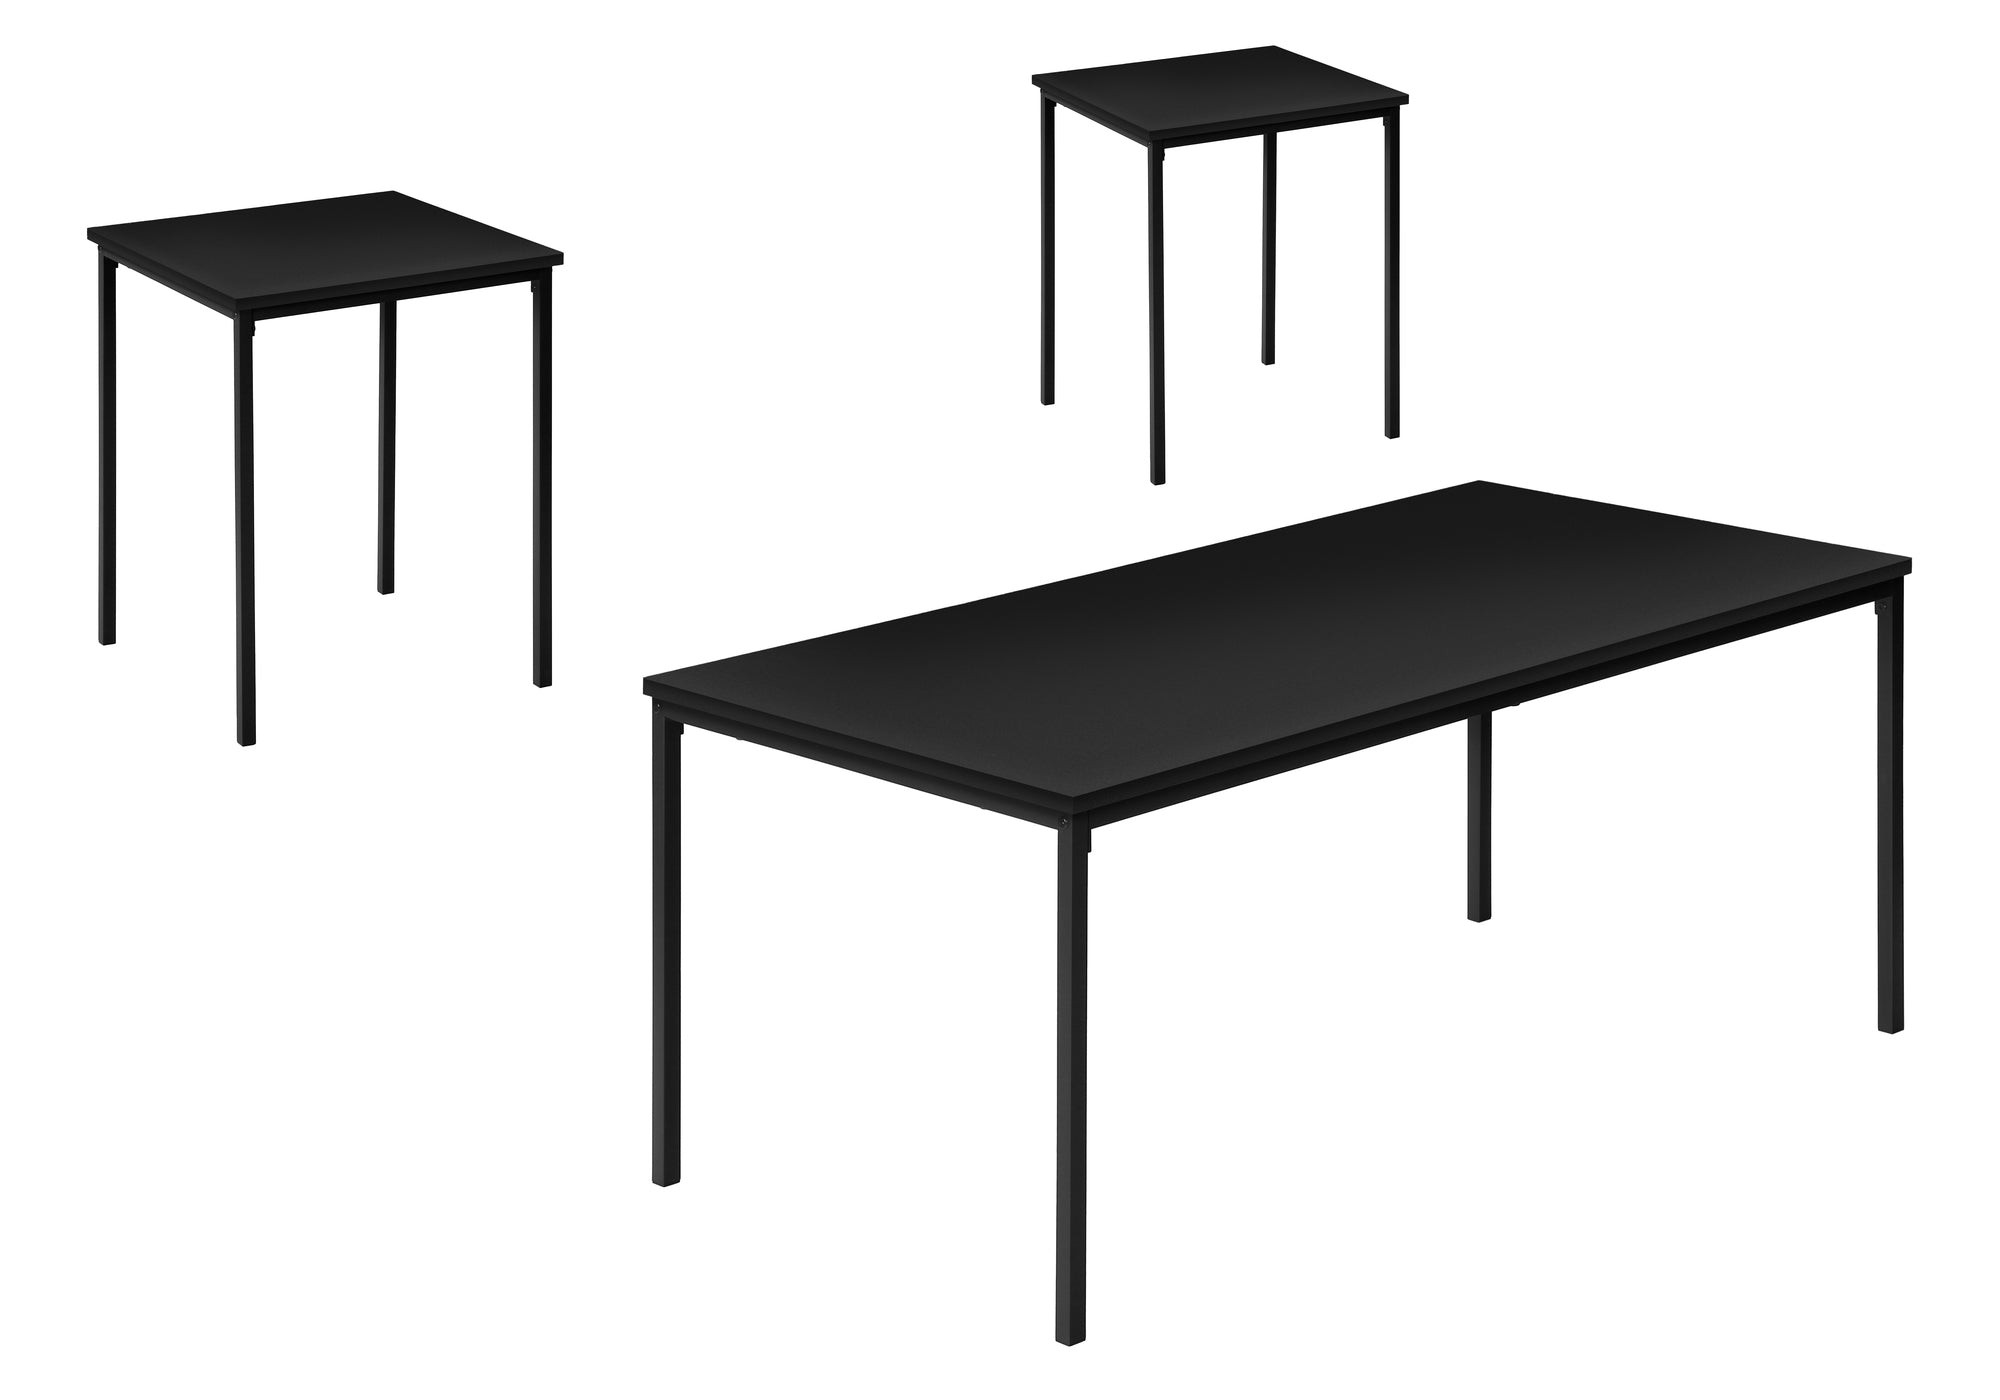 MN-167894P    Table Set, 3pcs Set, Coffee, End, Black Metal, Black Laminate, Contemporary, Modern